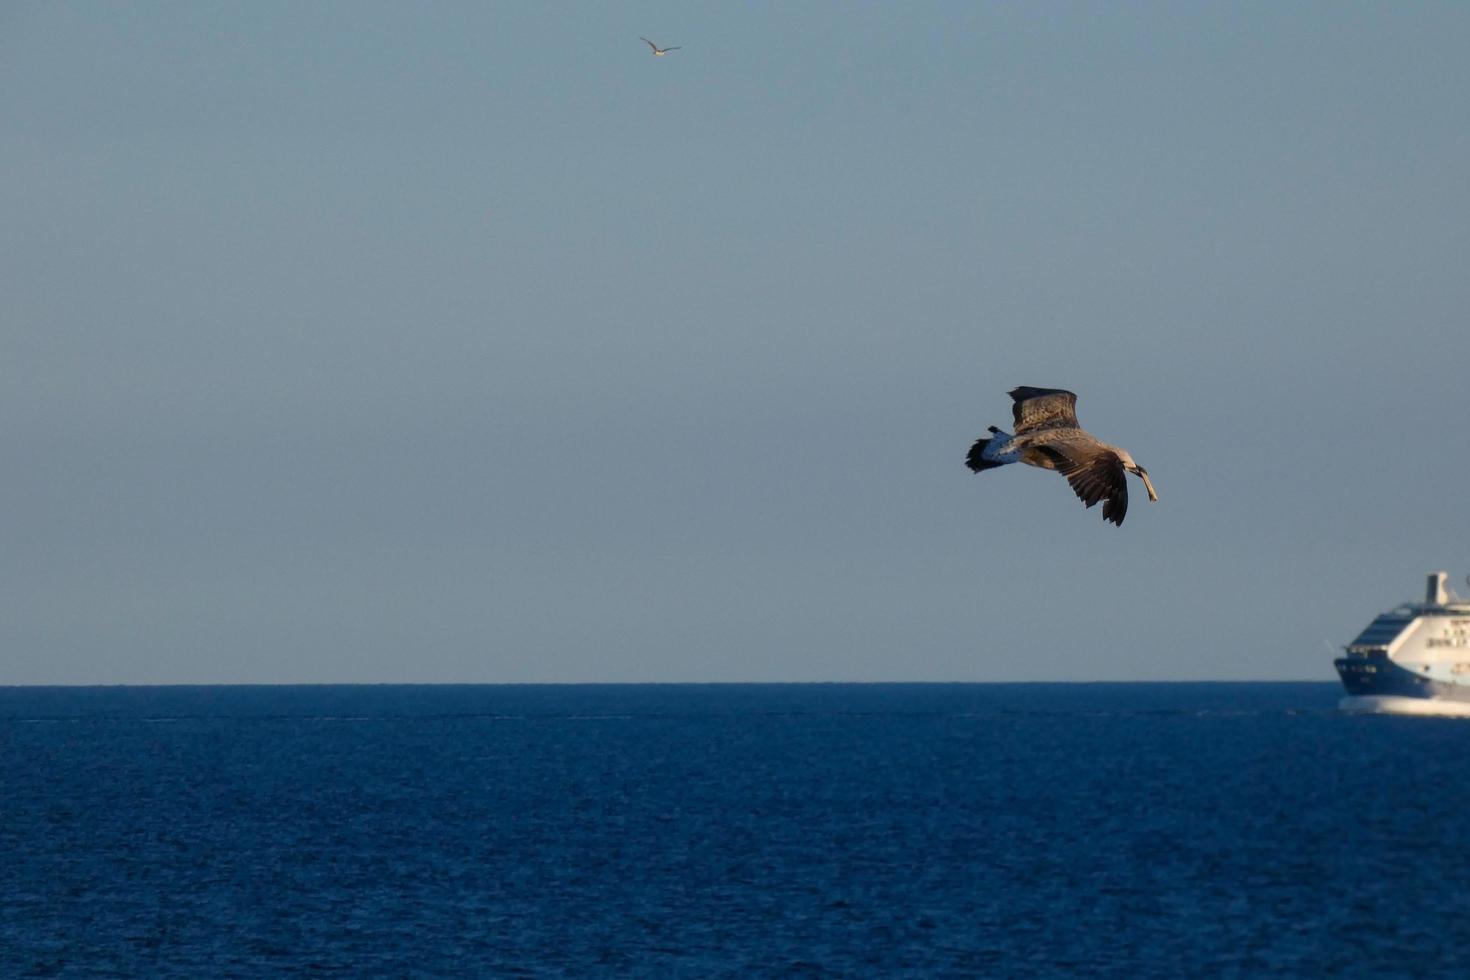 Seagulls flying in the Mediterranean sky, wild birds on the Catalan coast, Spain photo